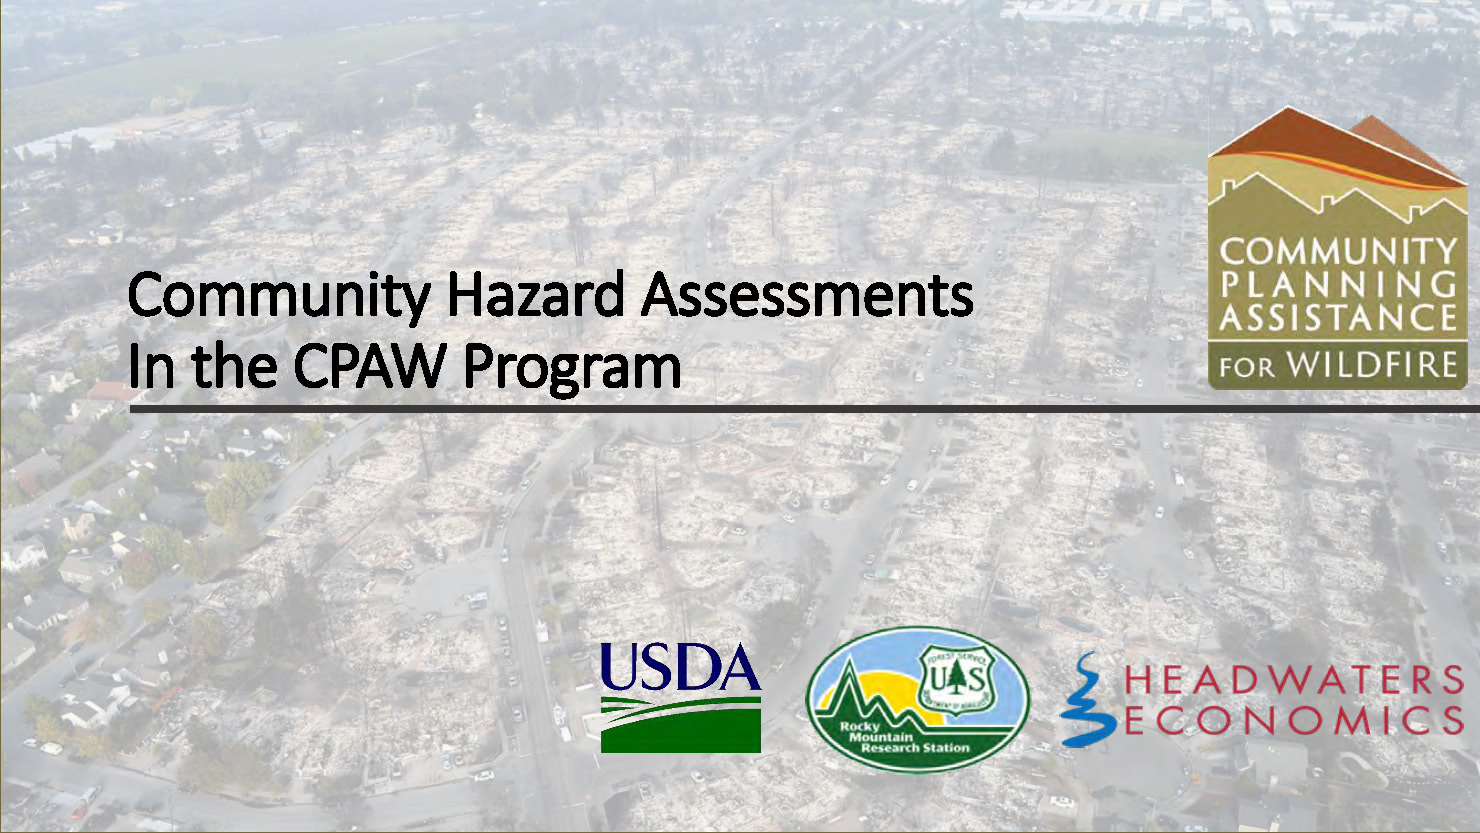 Presentation on Community Hazard Assessments in the CPAW Program